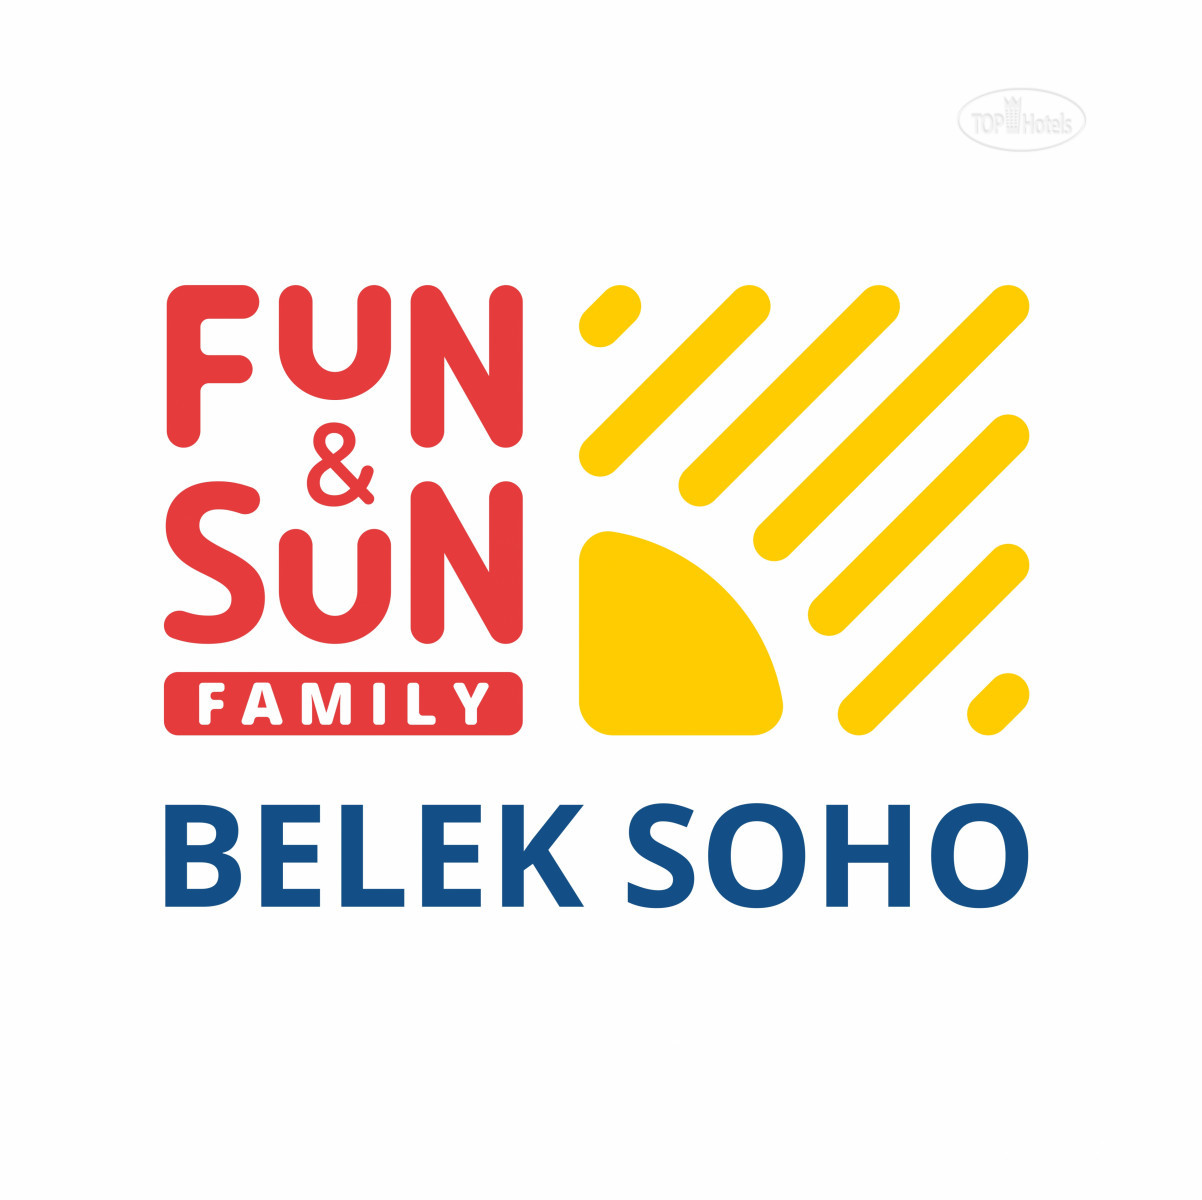 Fun fun family club belek. Sun Family Club логотип. Fun Sun Family Club Saphire логотип. Belek Beach Hotel logo. Отель Белек Сохо на карте.